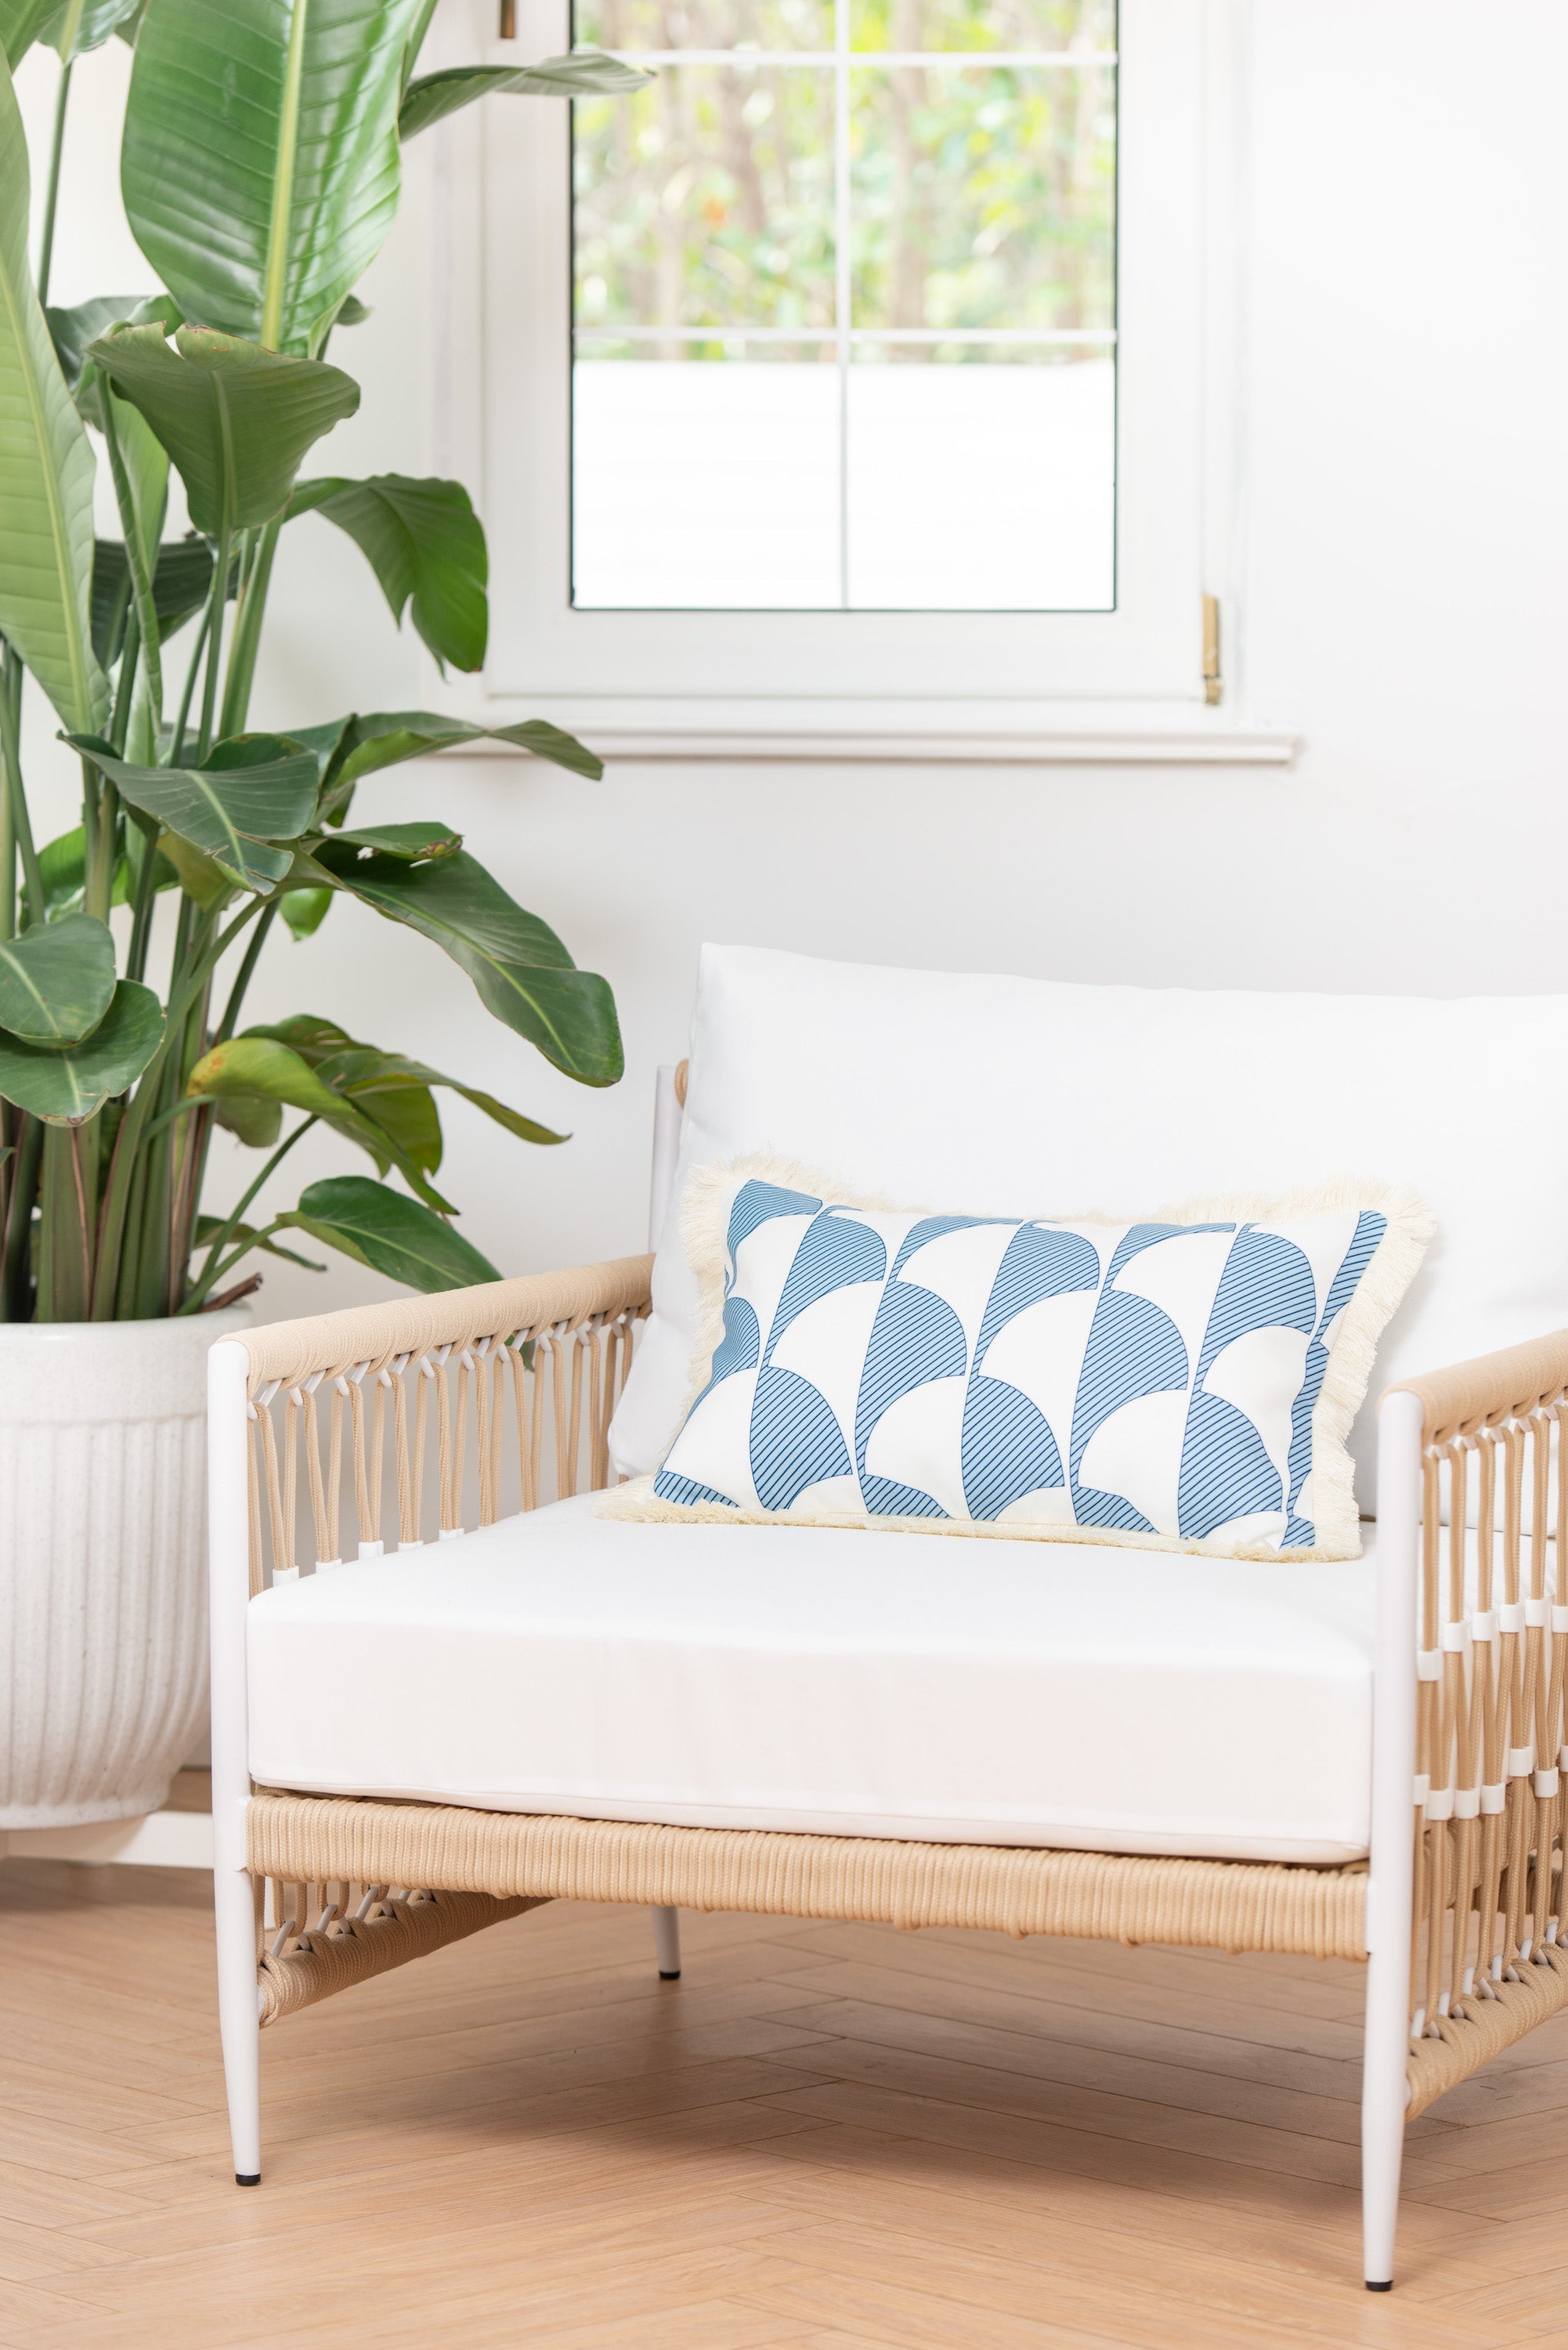 Coastal Hampton Style Indoor Outdoor Lumbar Pillow Cover, Scale Motif Fringe, Baby Blue, 12"x20"